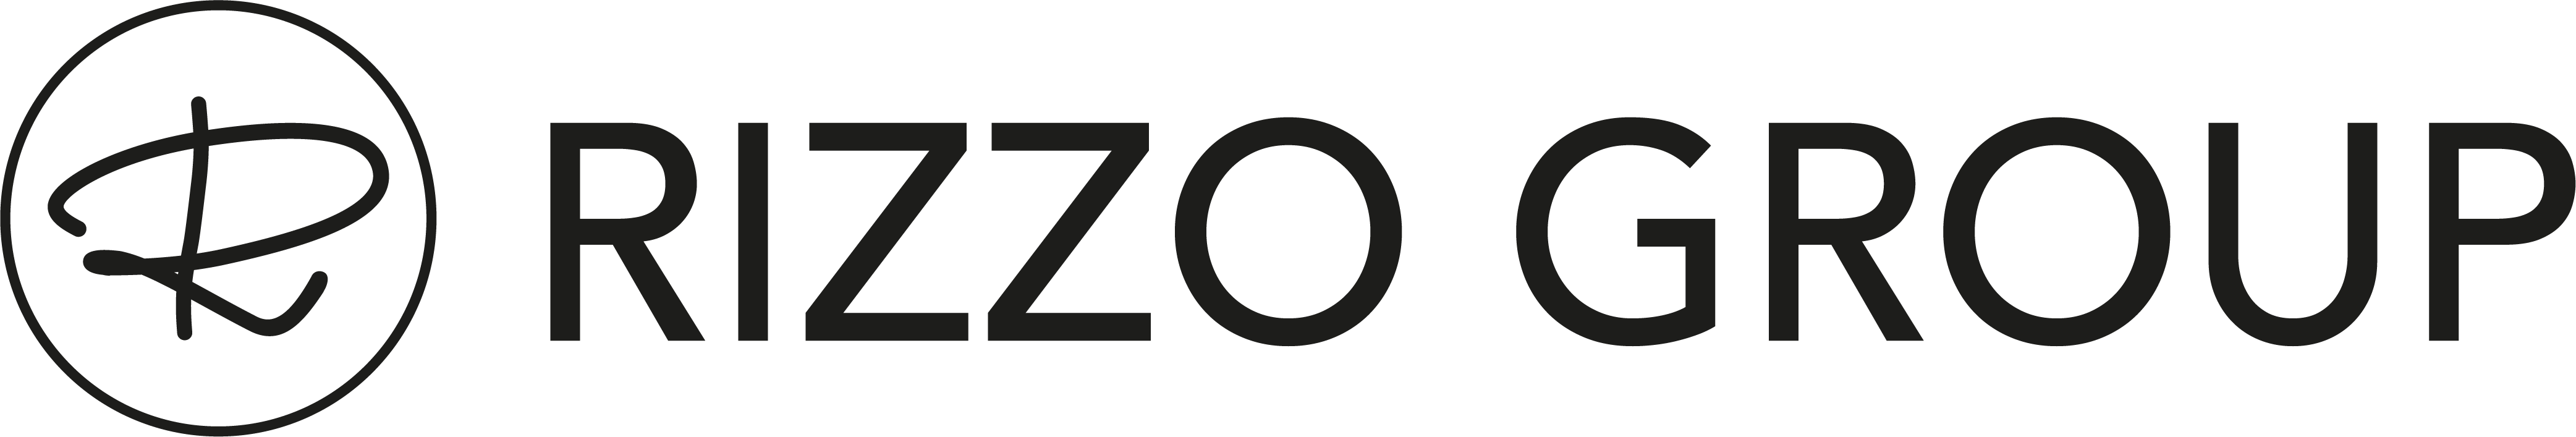 rizzogroup-logo